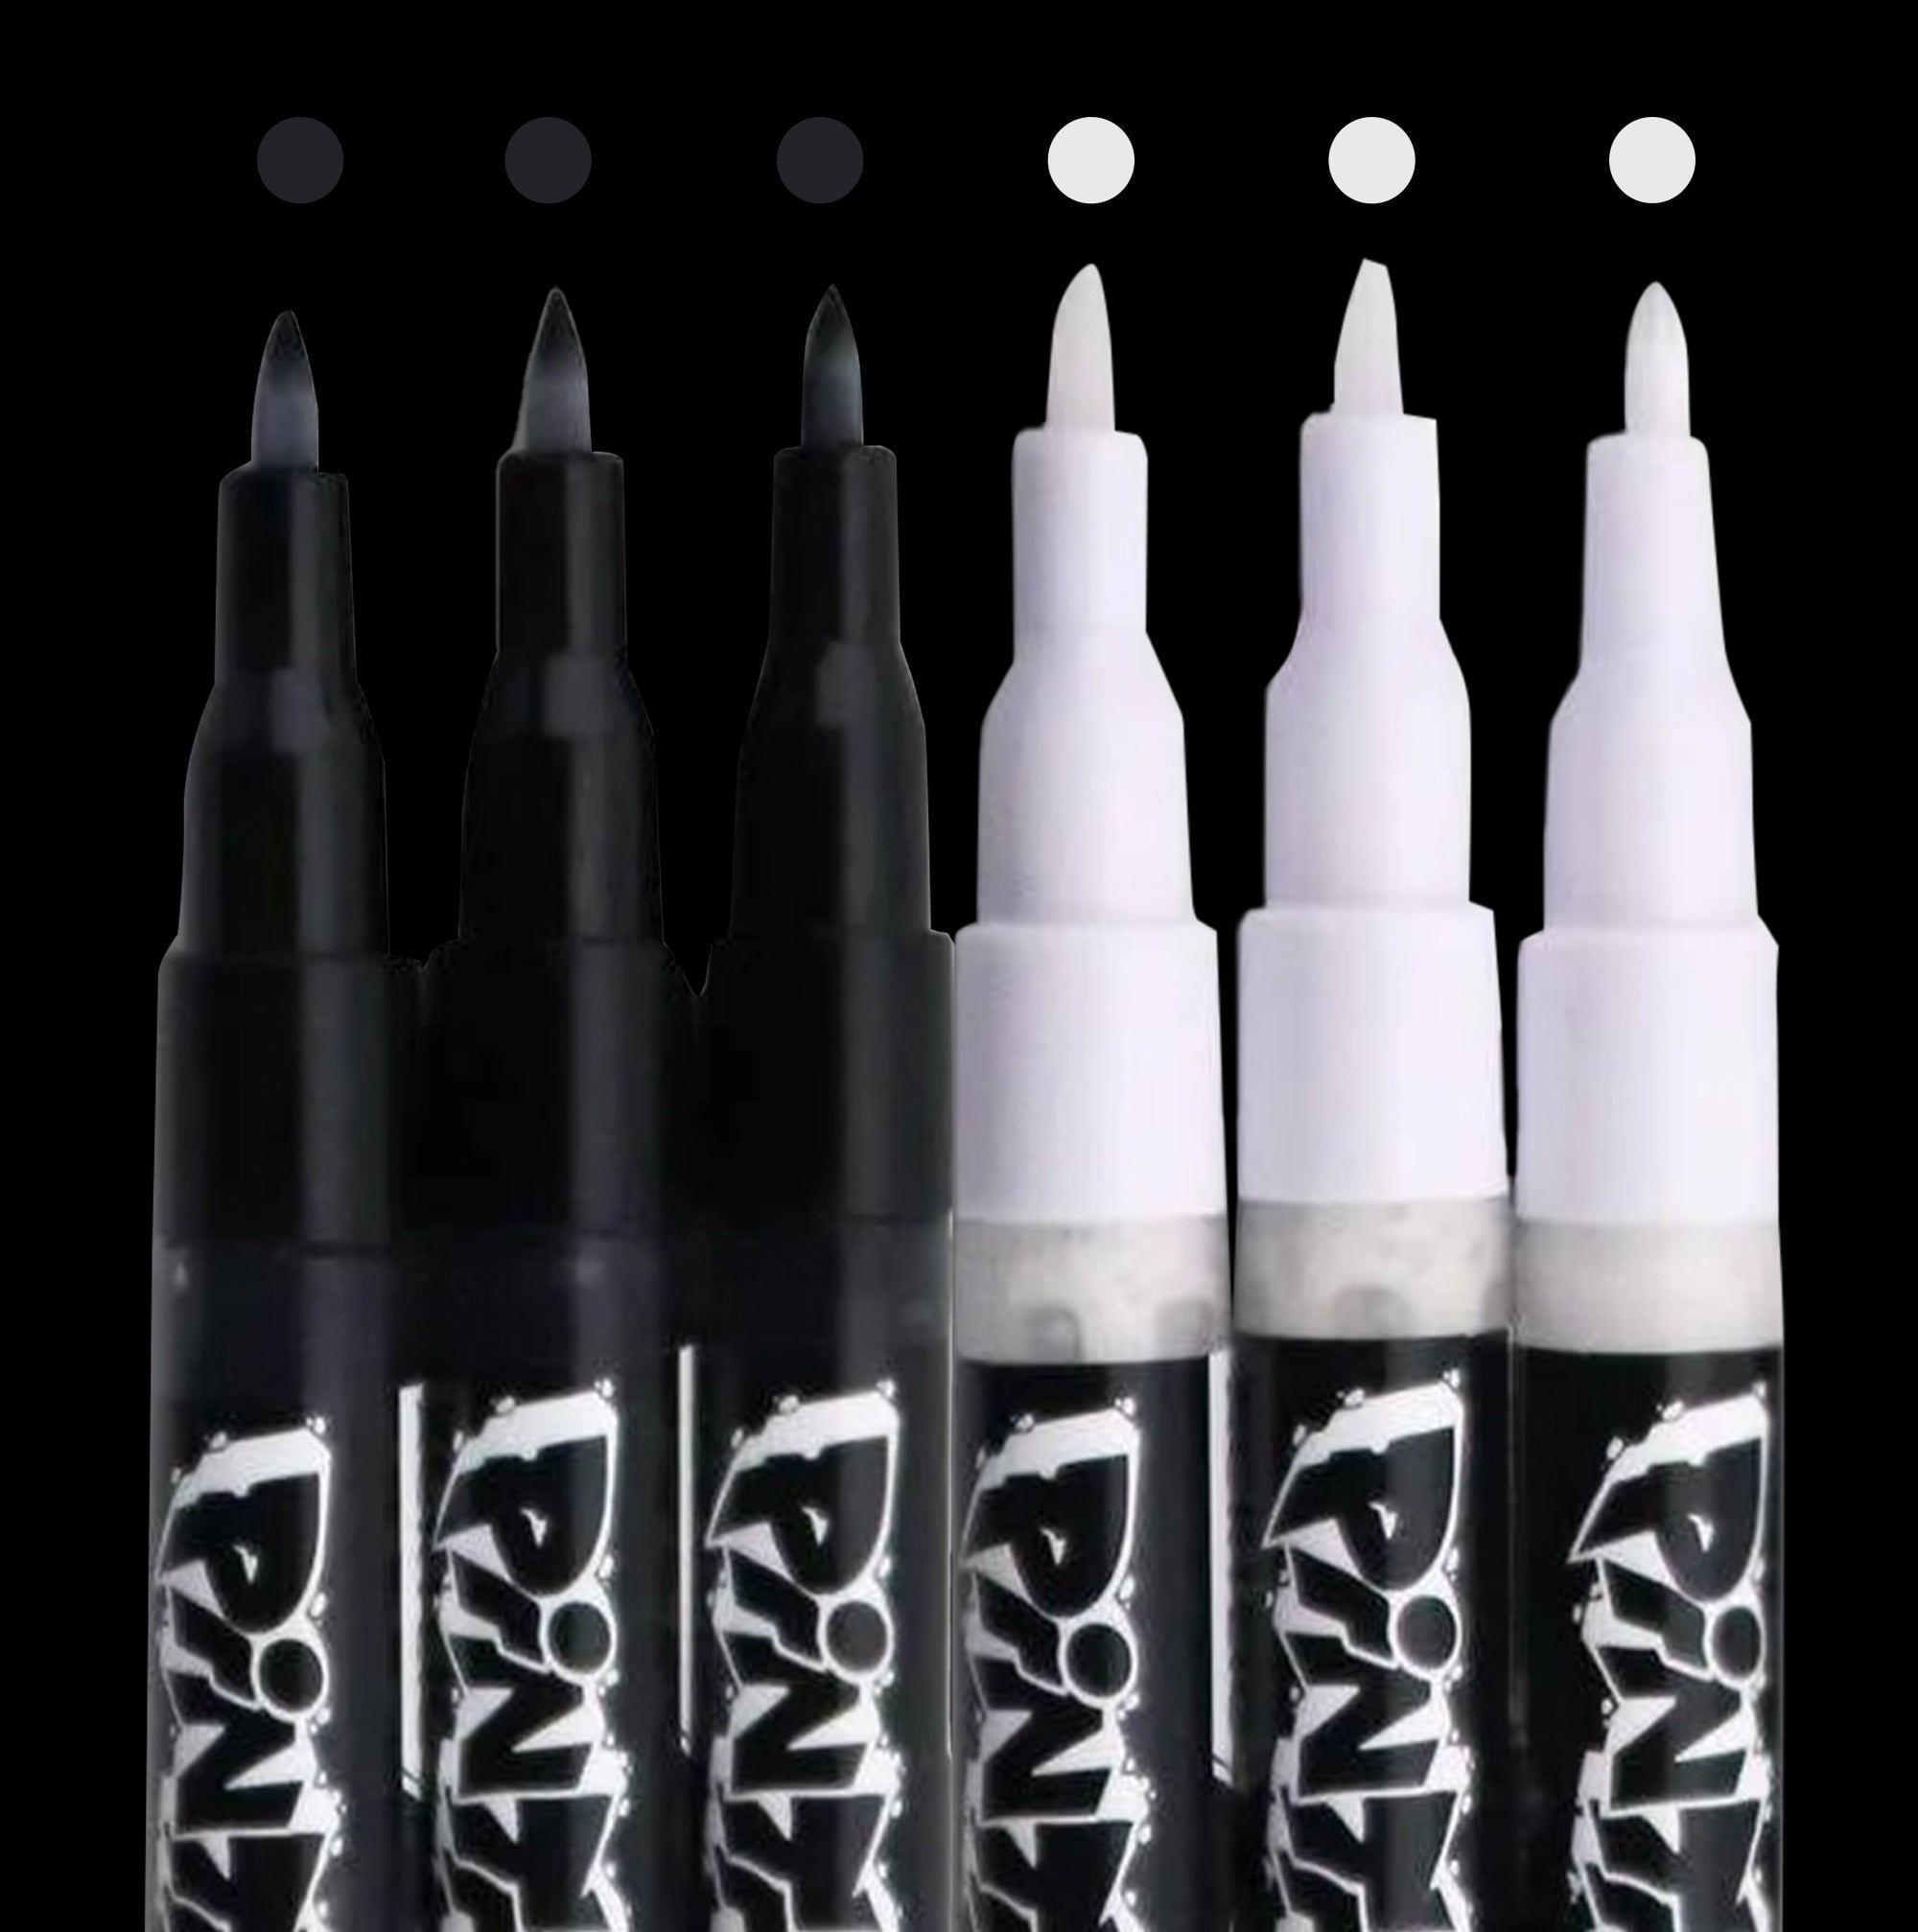 Acrylic Paint Pens,6 Pack Black White Paint Markers, Paint Pens For Rock  Painting Stone Ceramic Glass Wood Plastic Metal